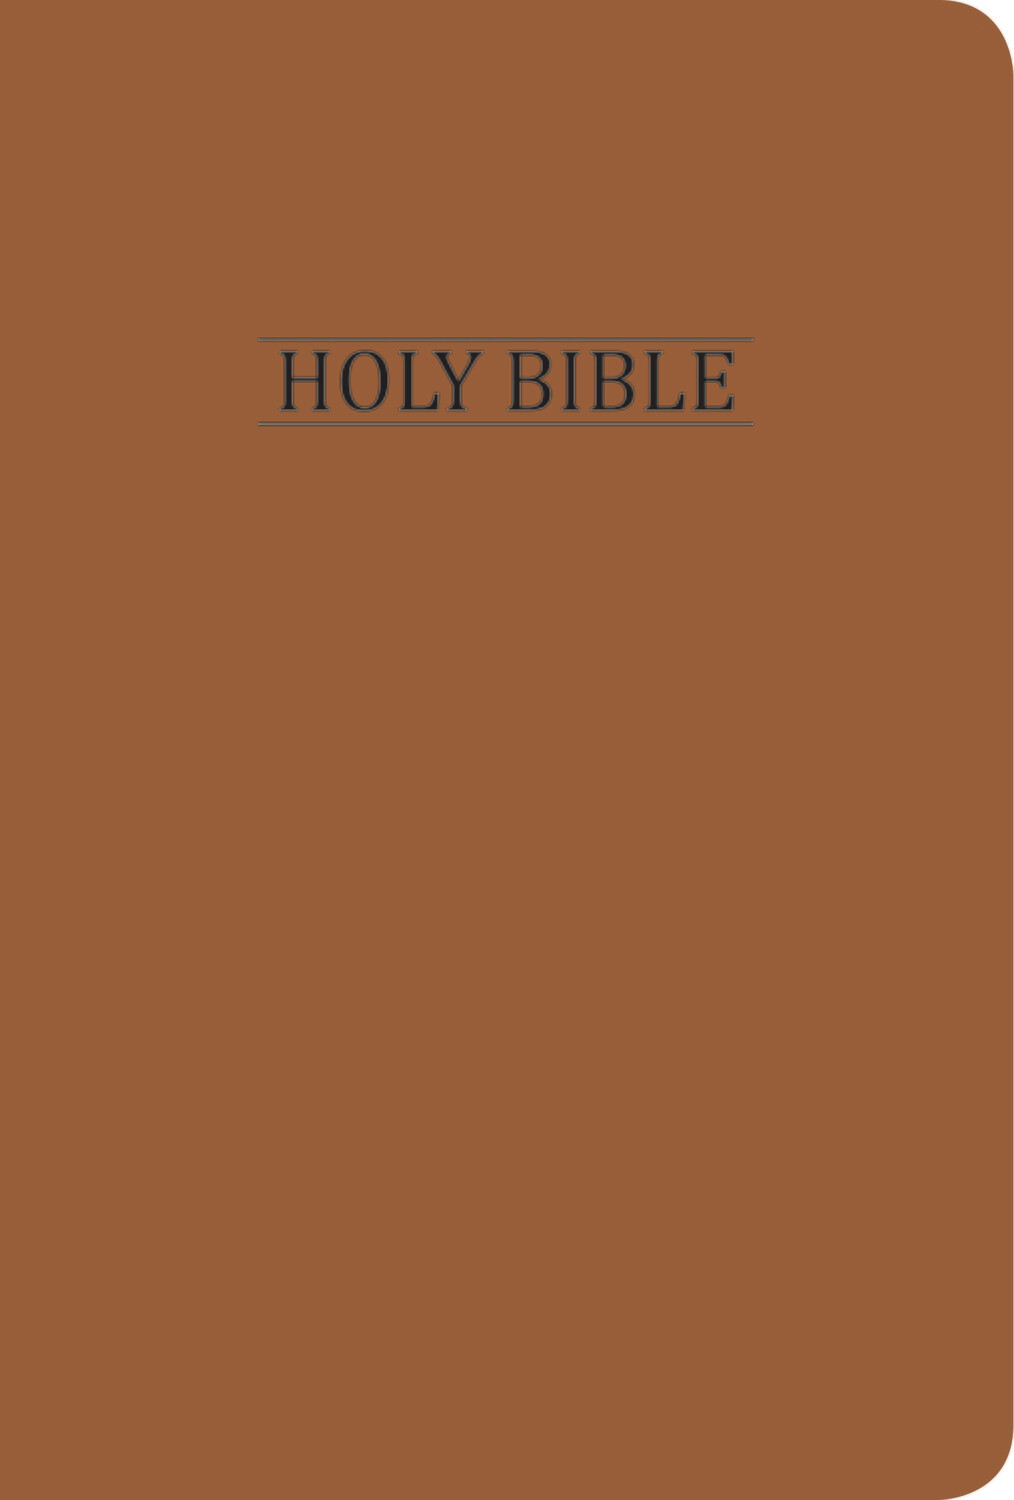 NIV LEATHER TOUCH TAN BIBLE